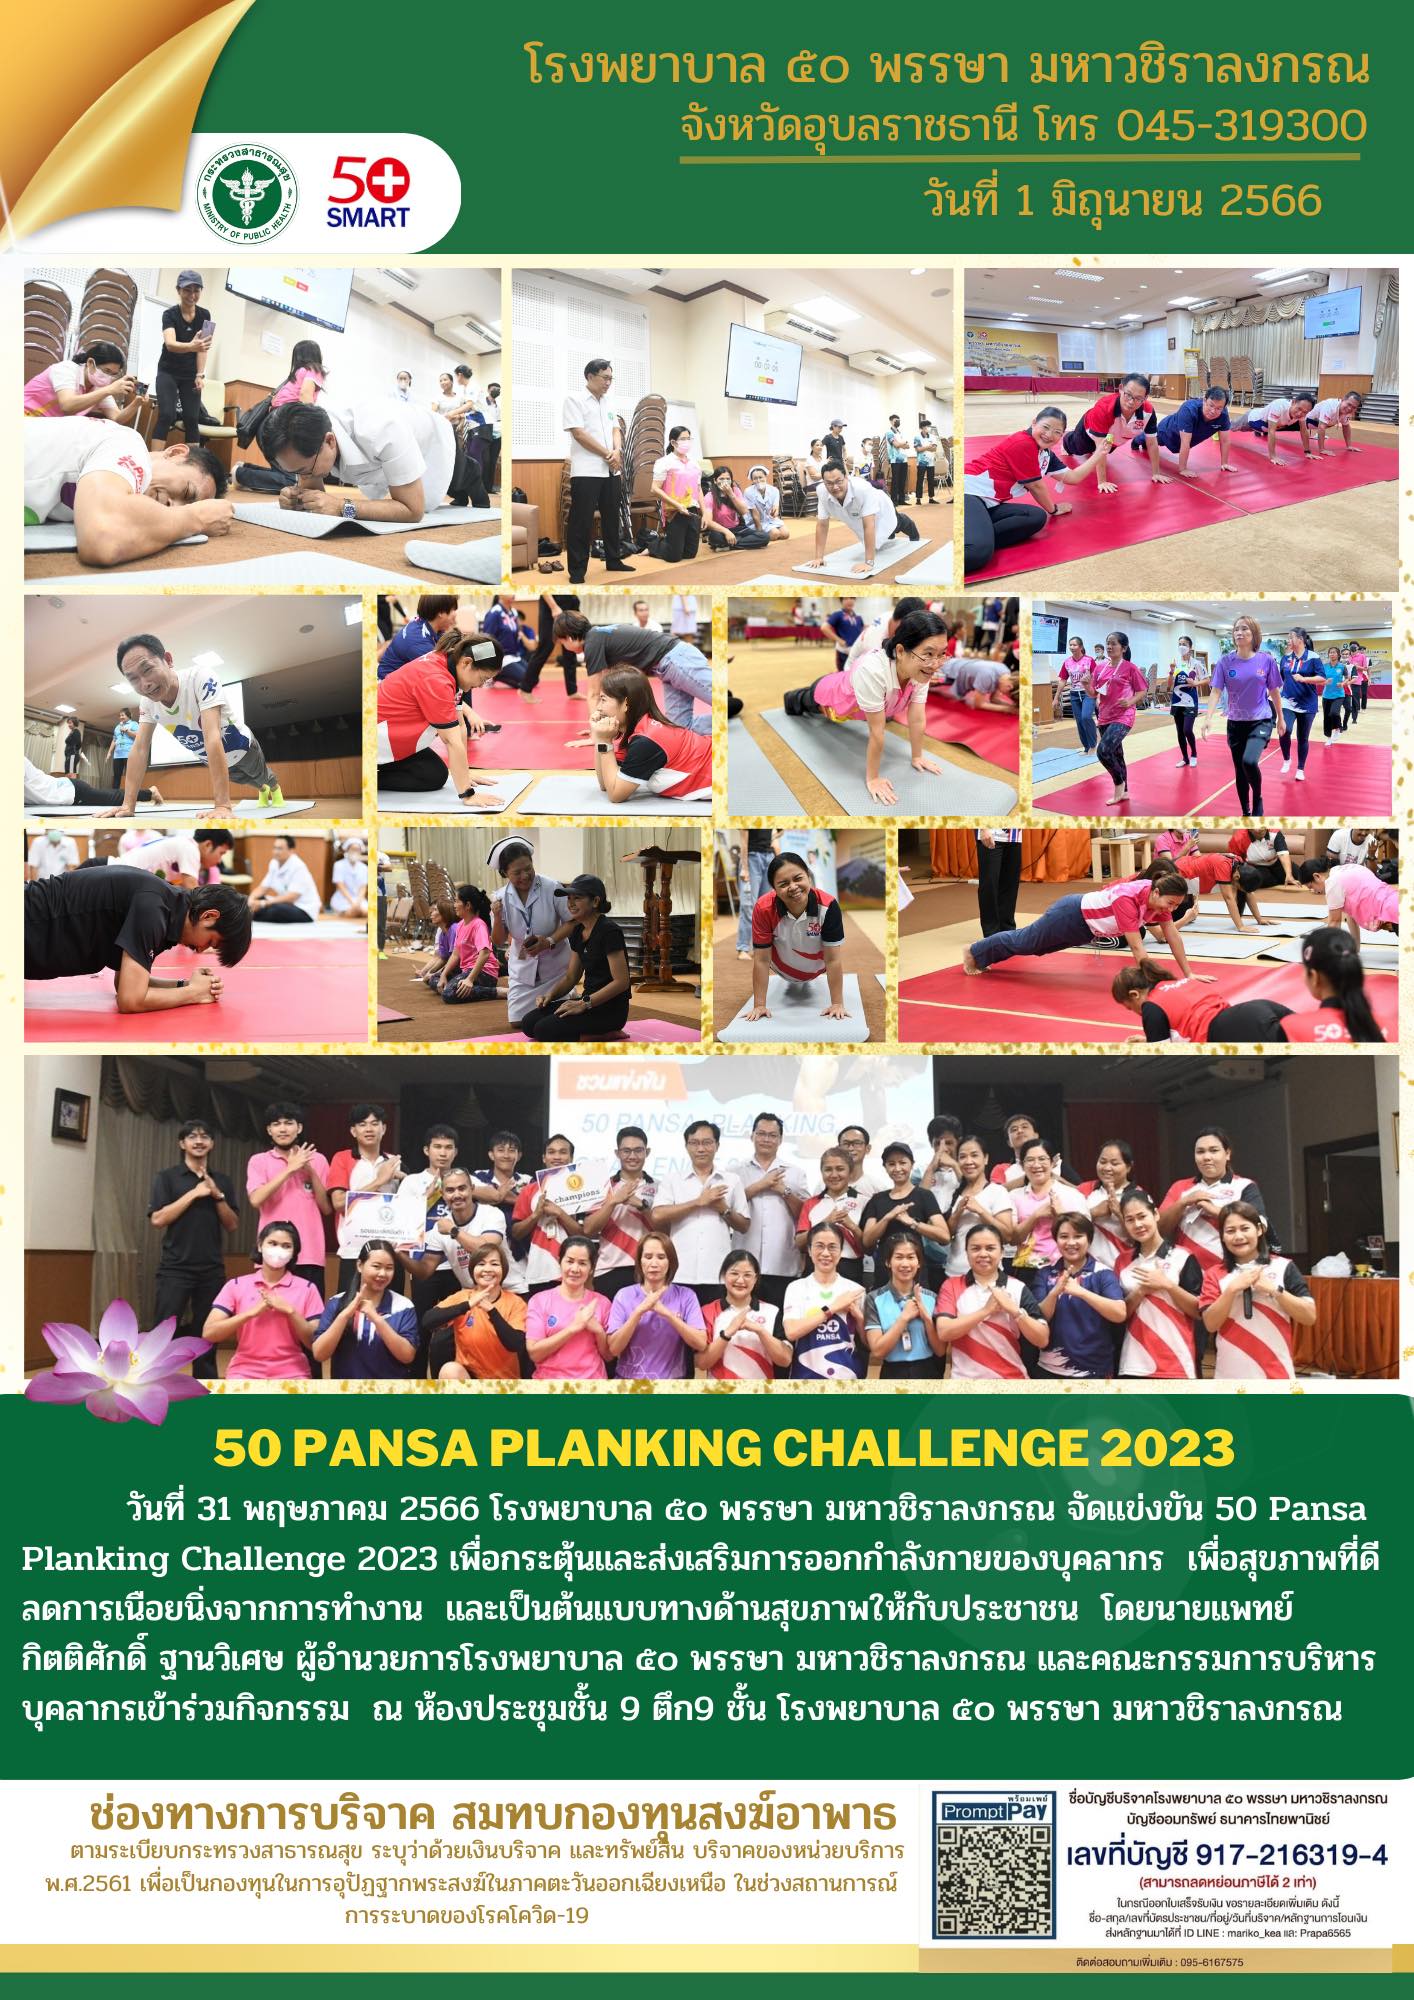 50 Pansa Planking Challenge 2023